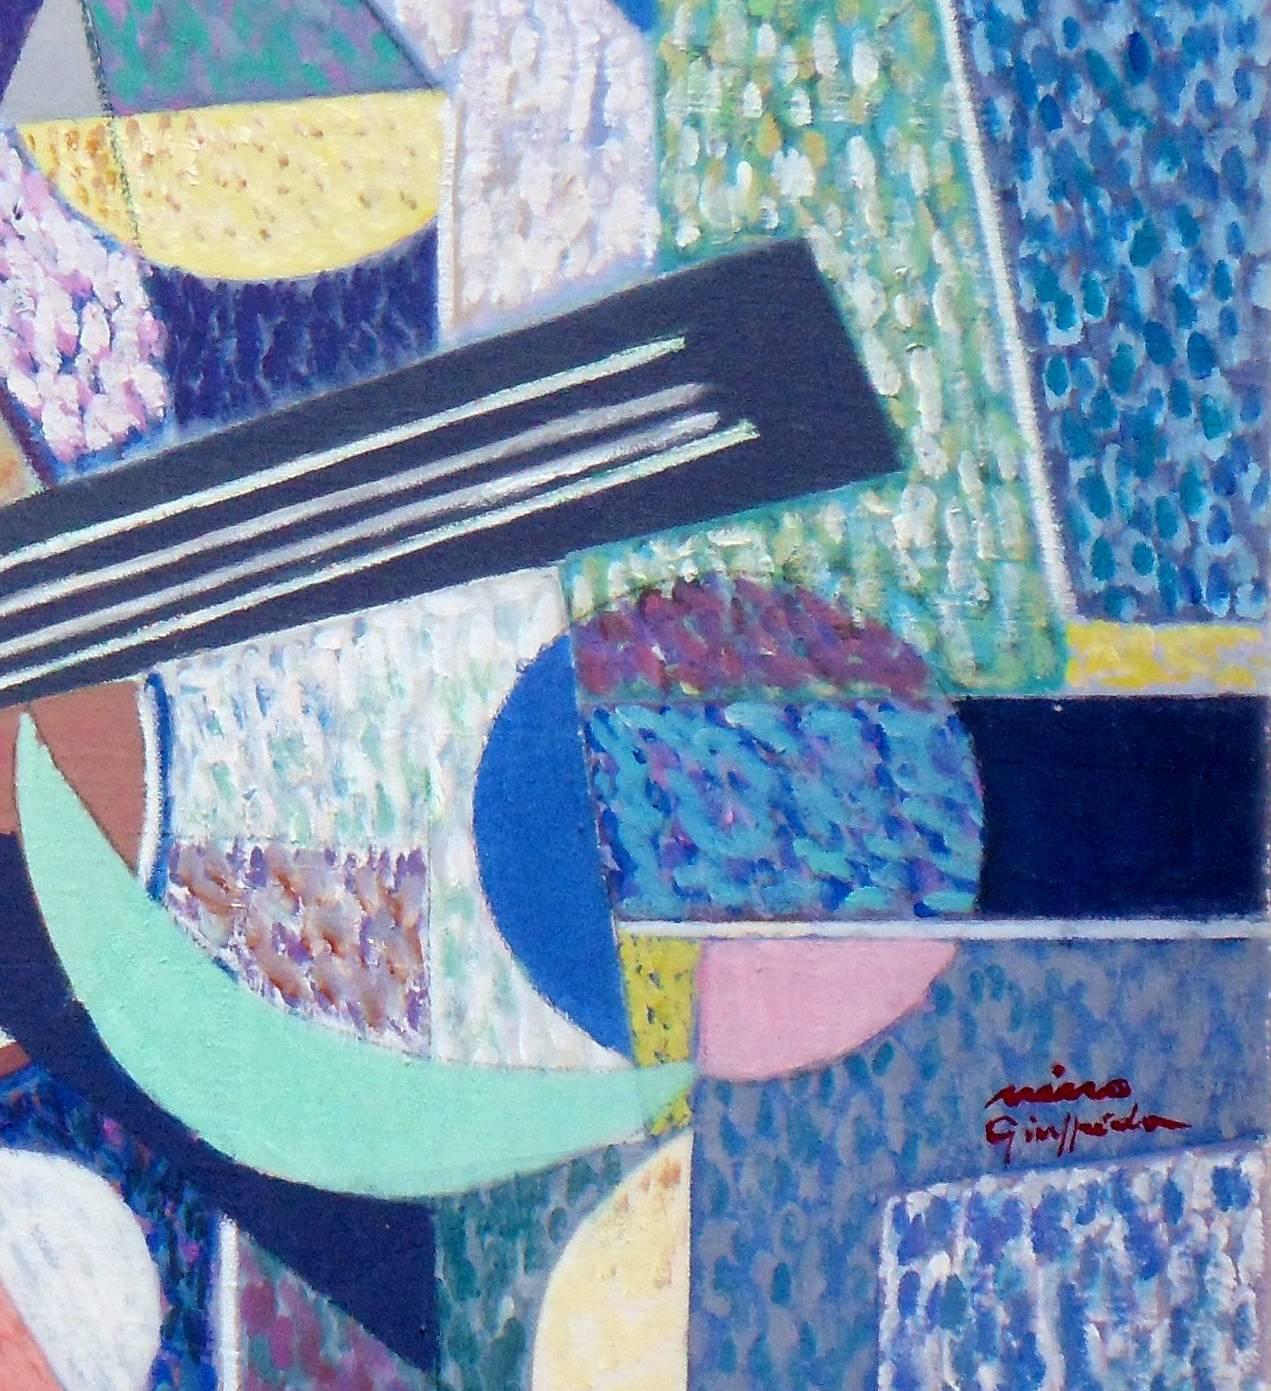 Vibration's Guitare - Painting by Nino Giuffrida